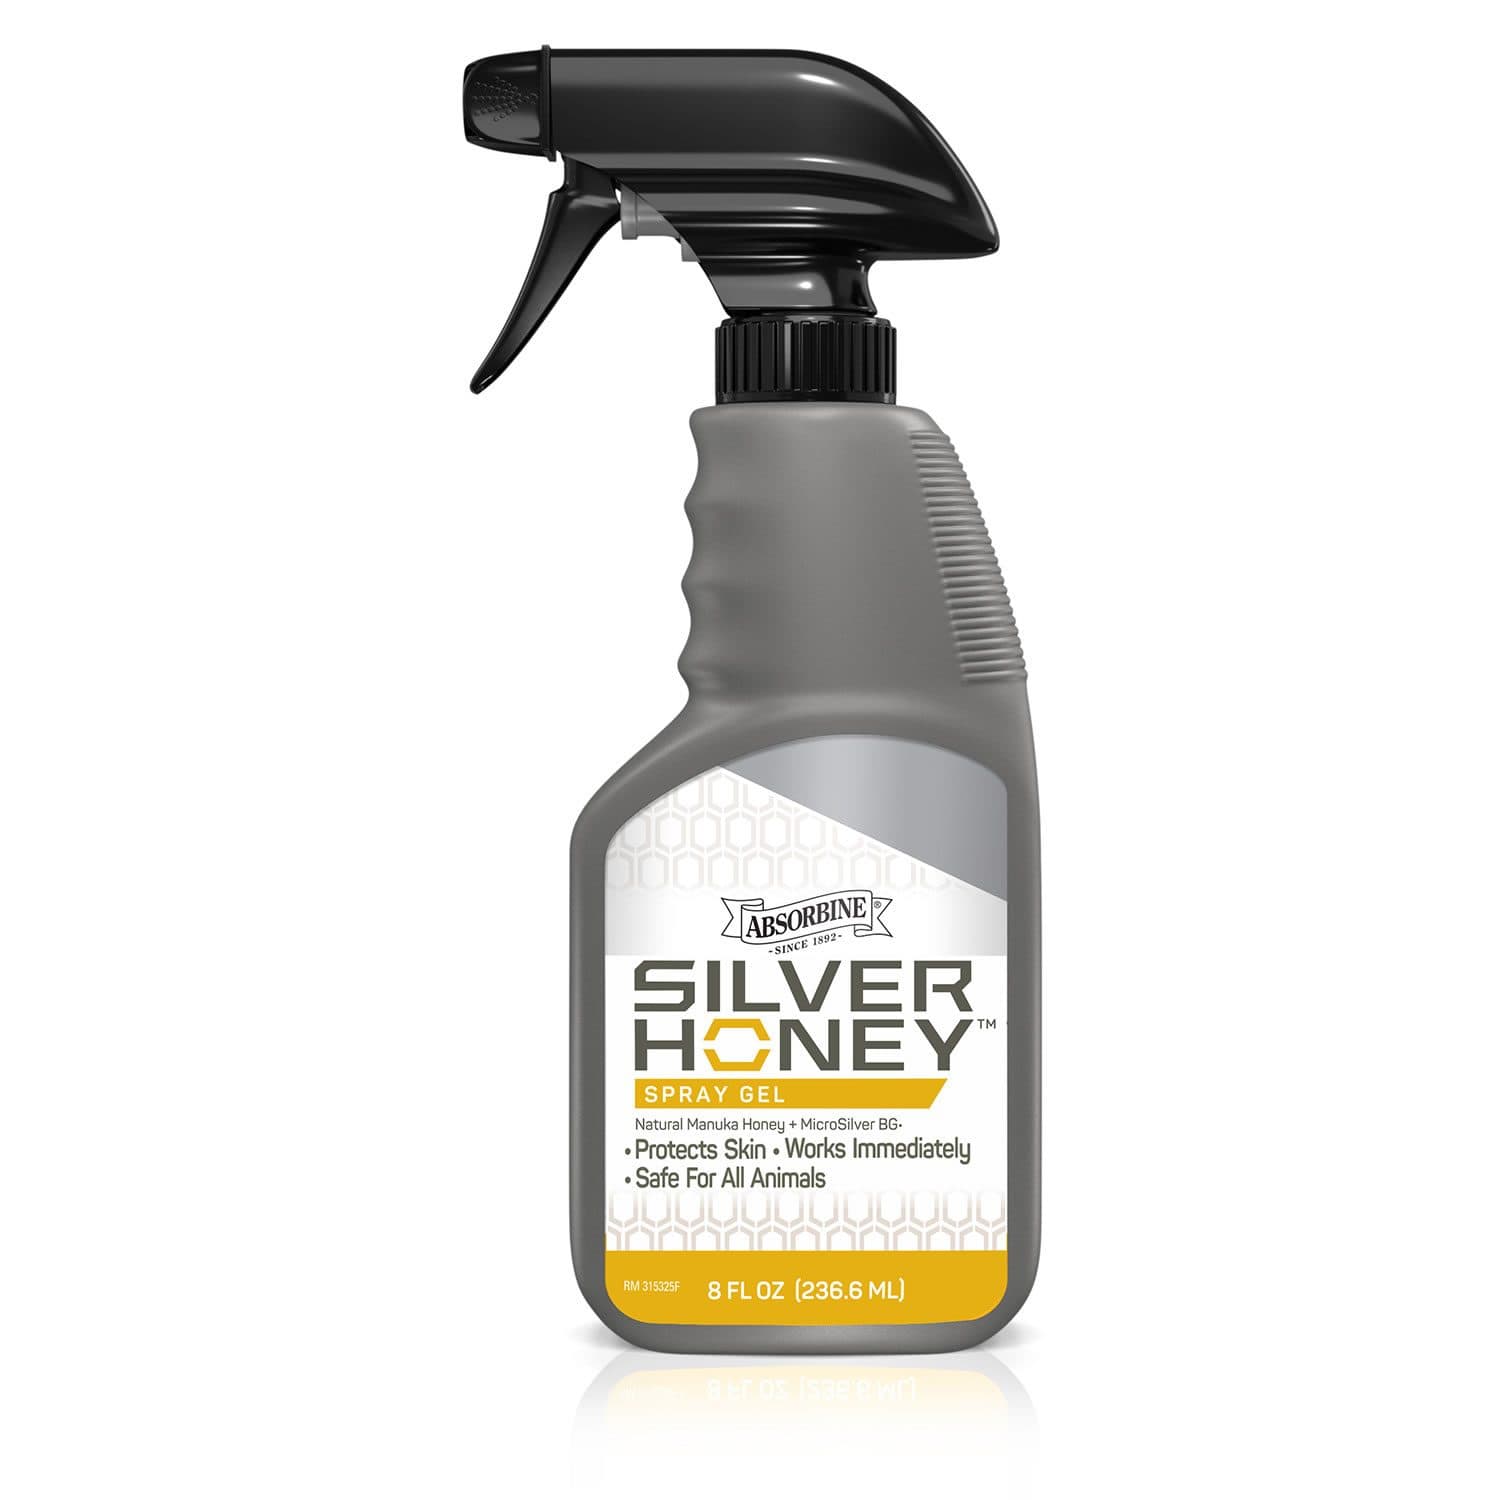 Silver honey spray gel